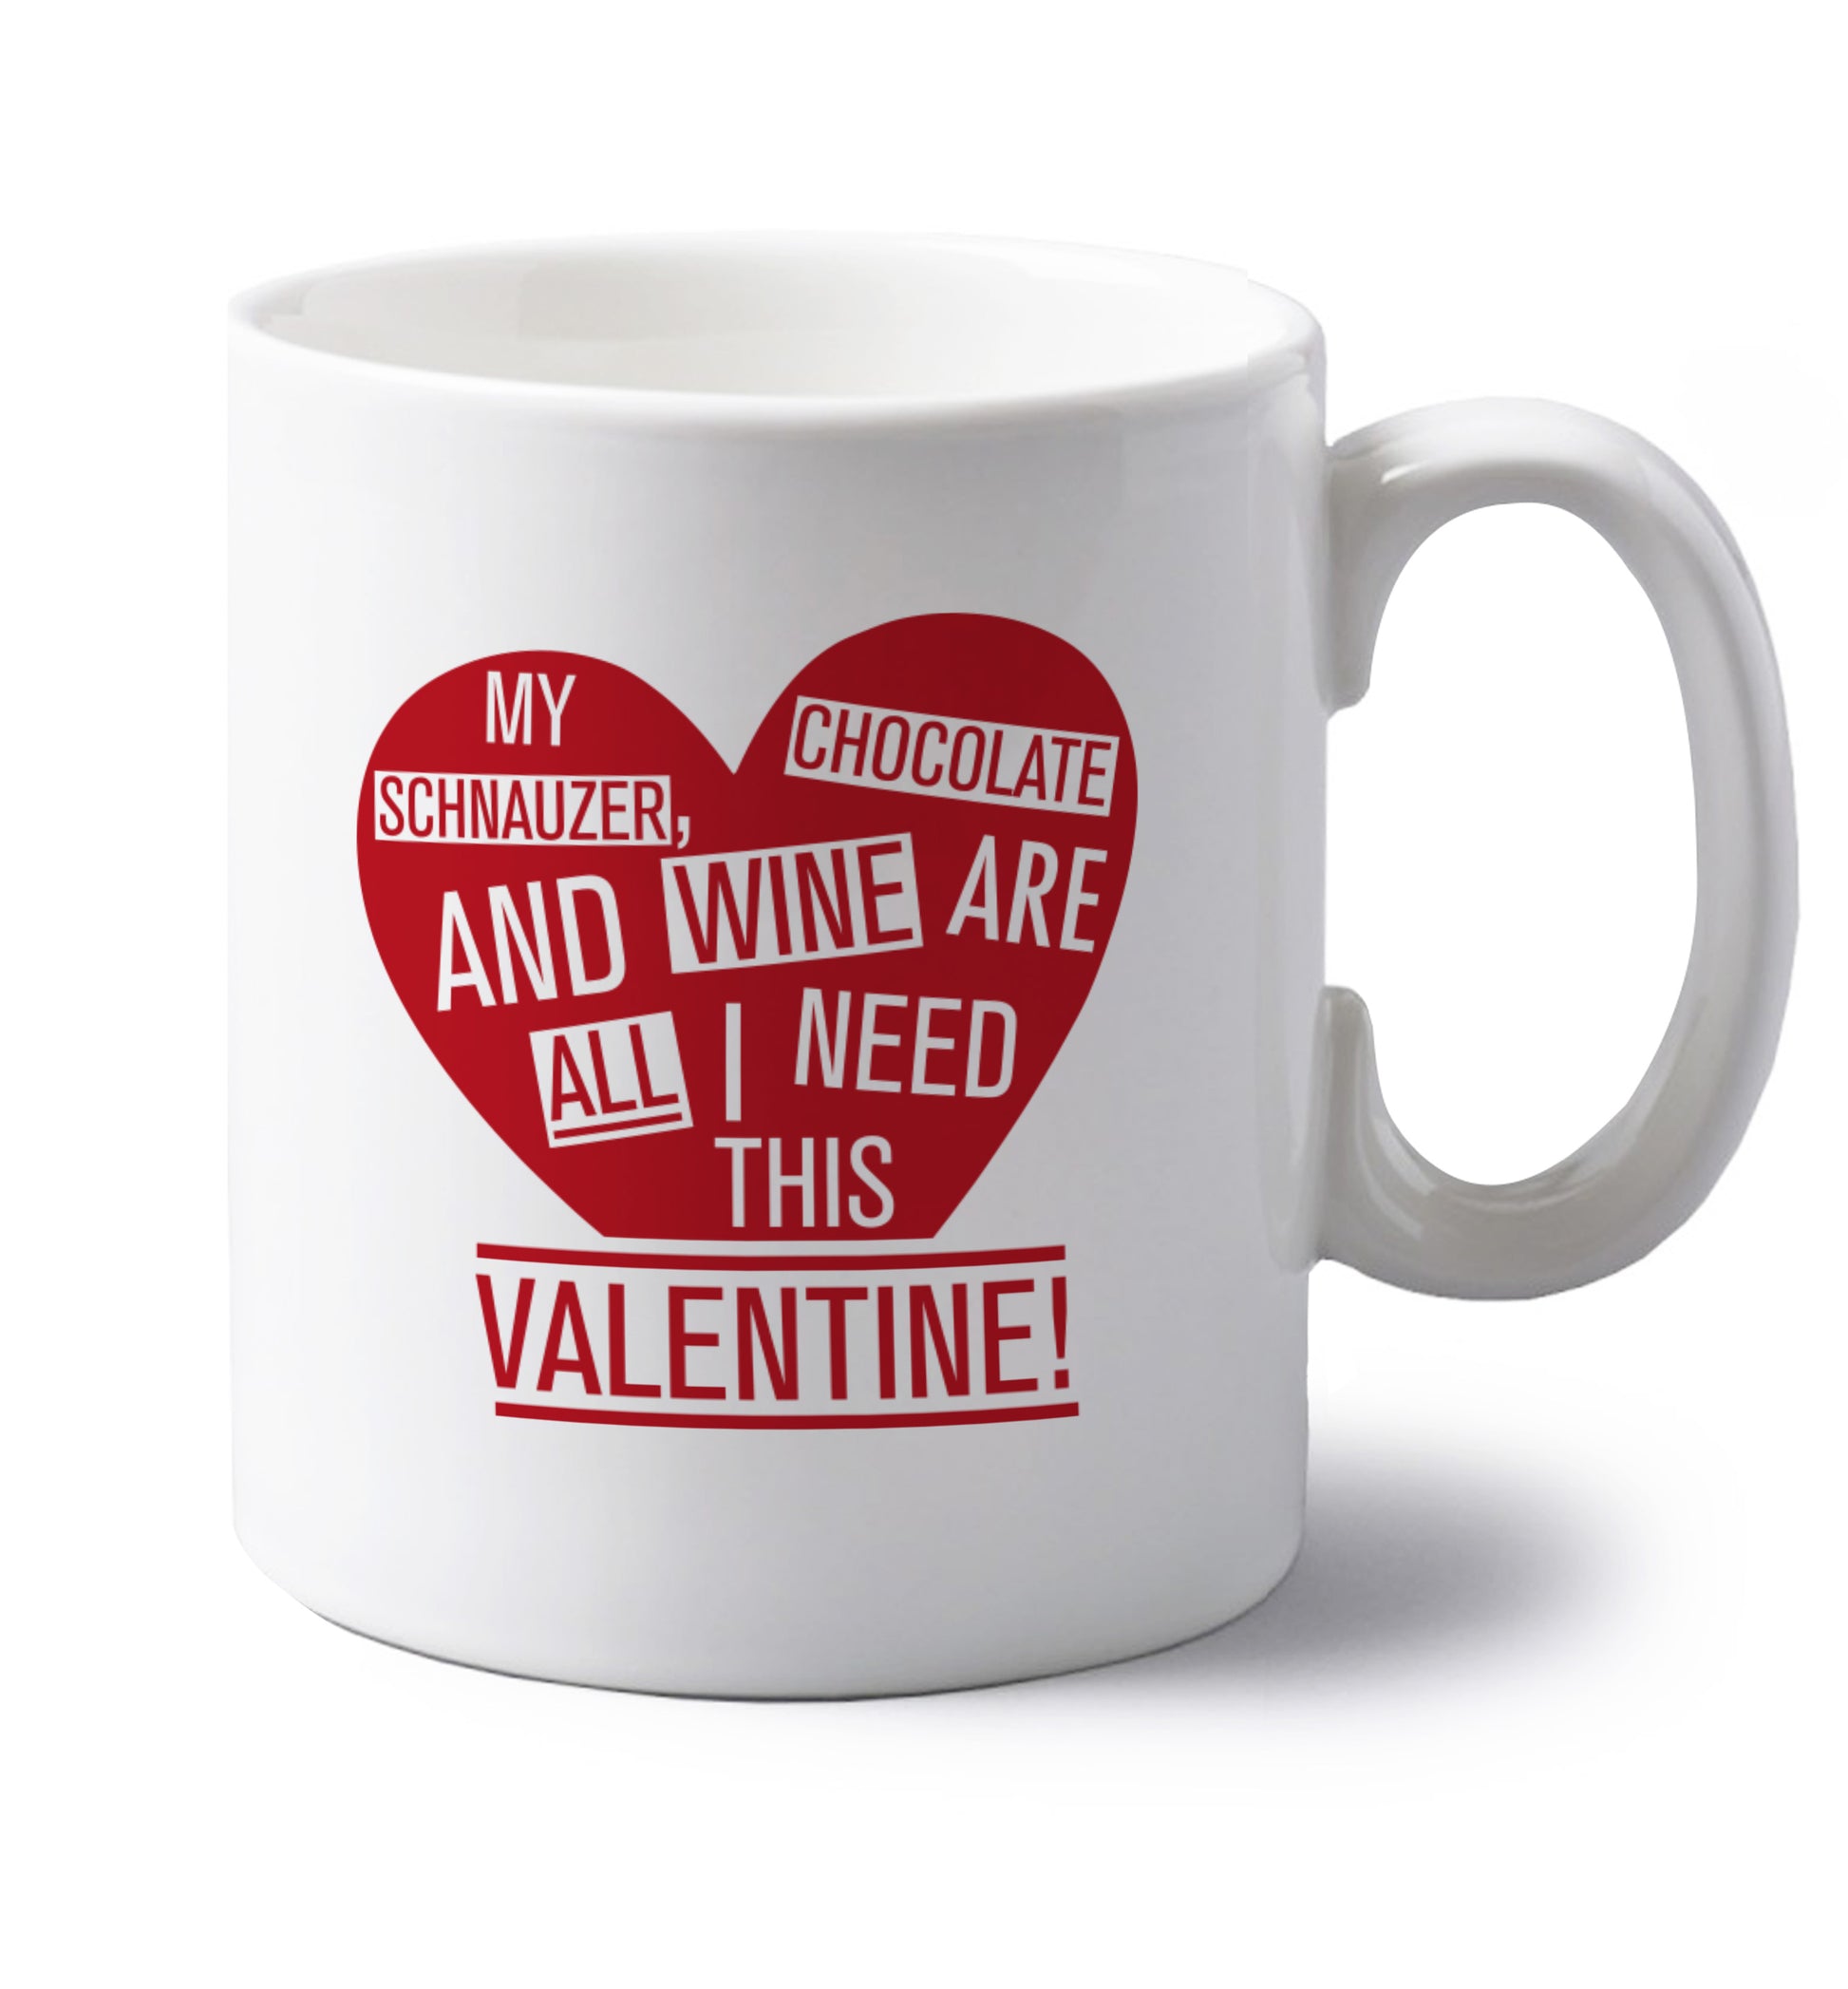 My schnauzer, chocolate and wine are all I need this valentine! left handed white ceramic mug 